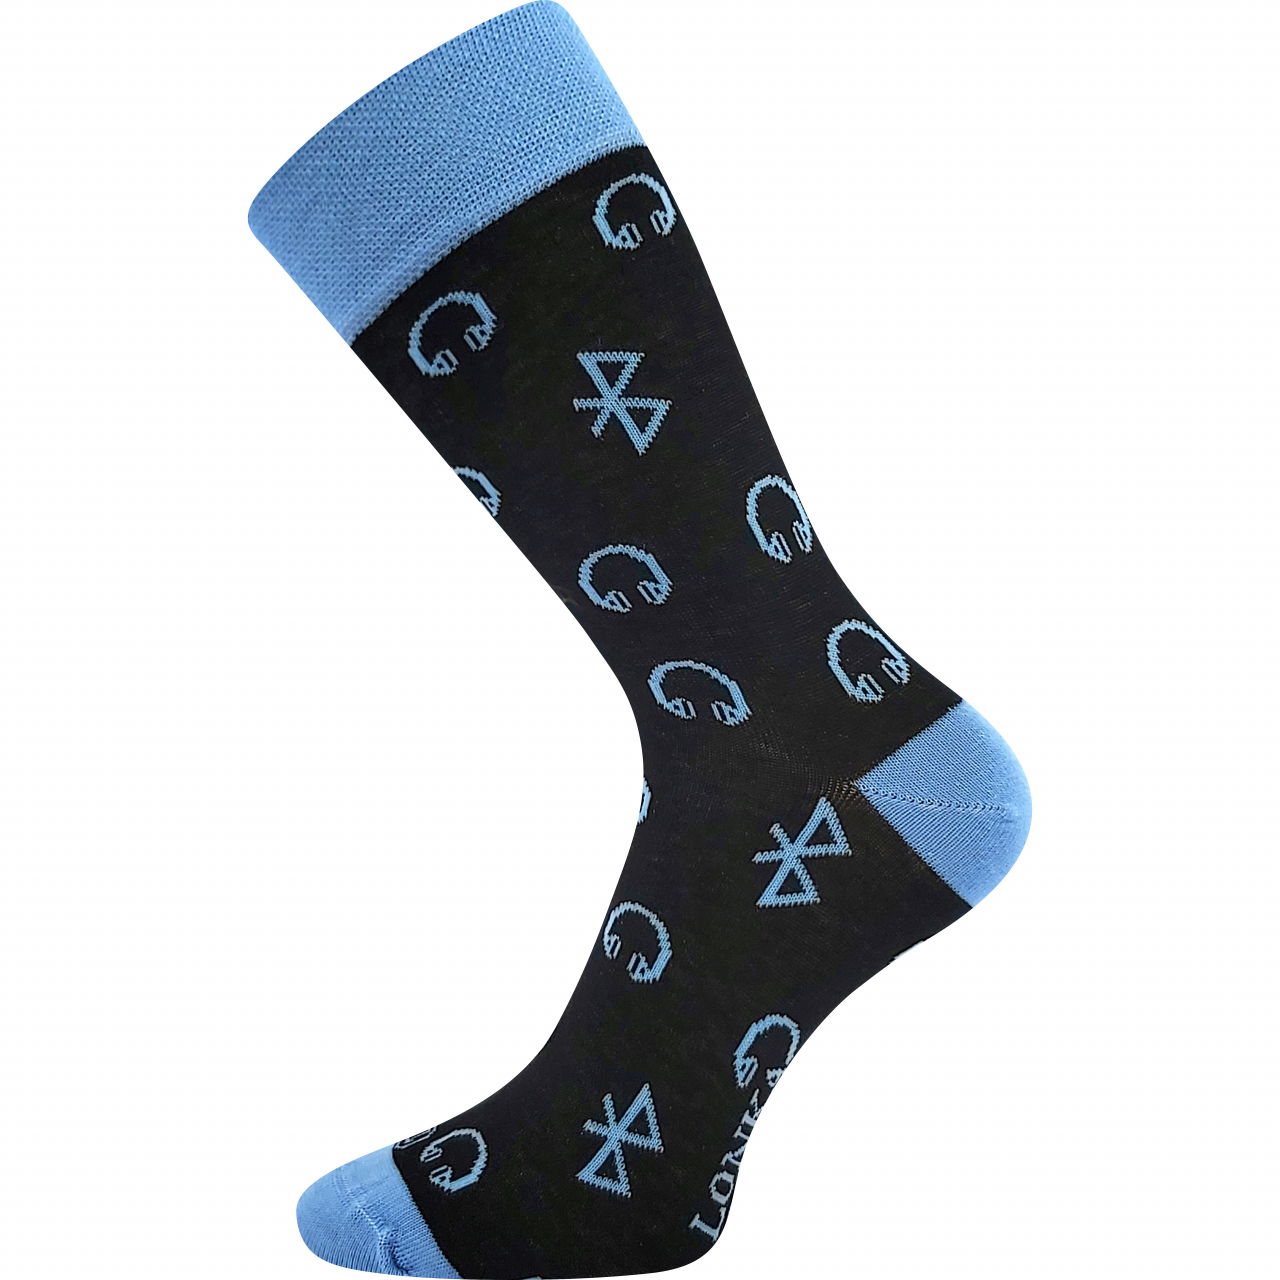 Ponožky trendy unisex Lonka Woodoo Bluetooth - černé-modré, 39-42